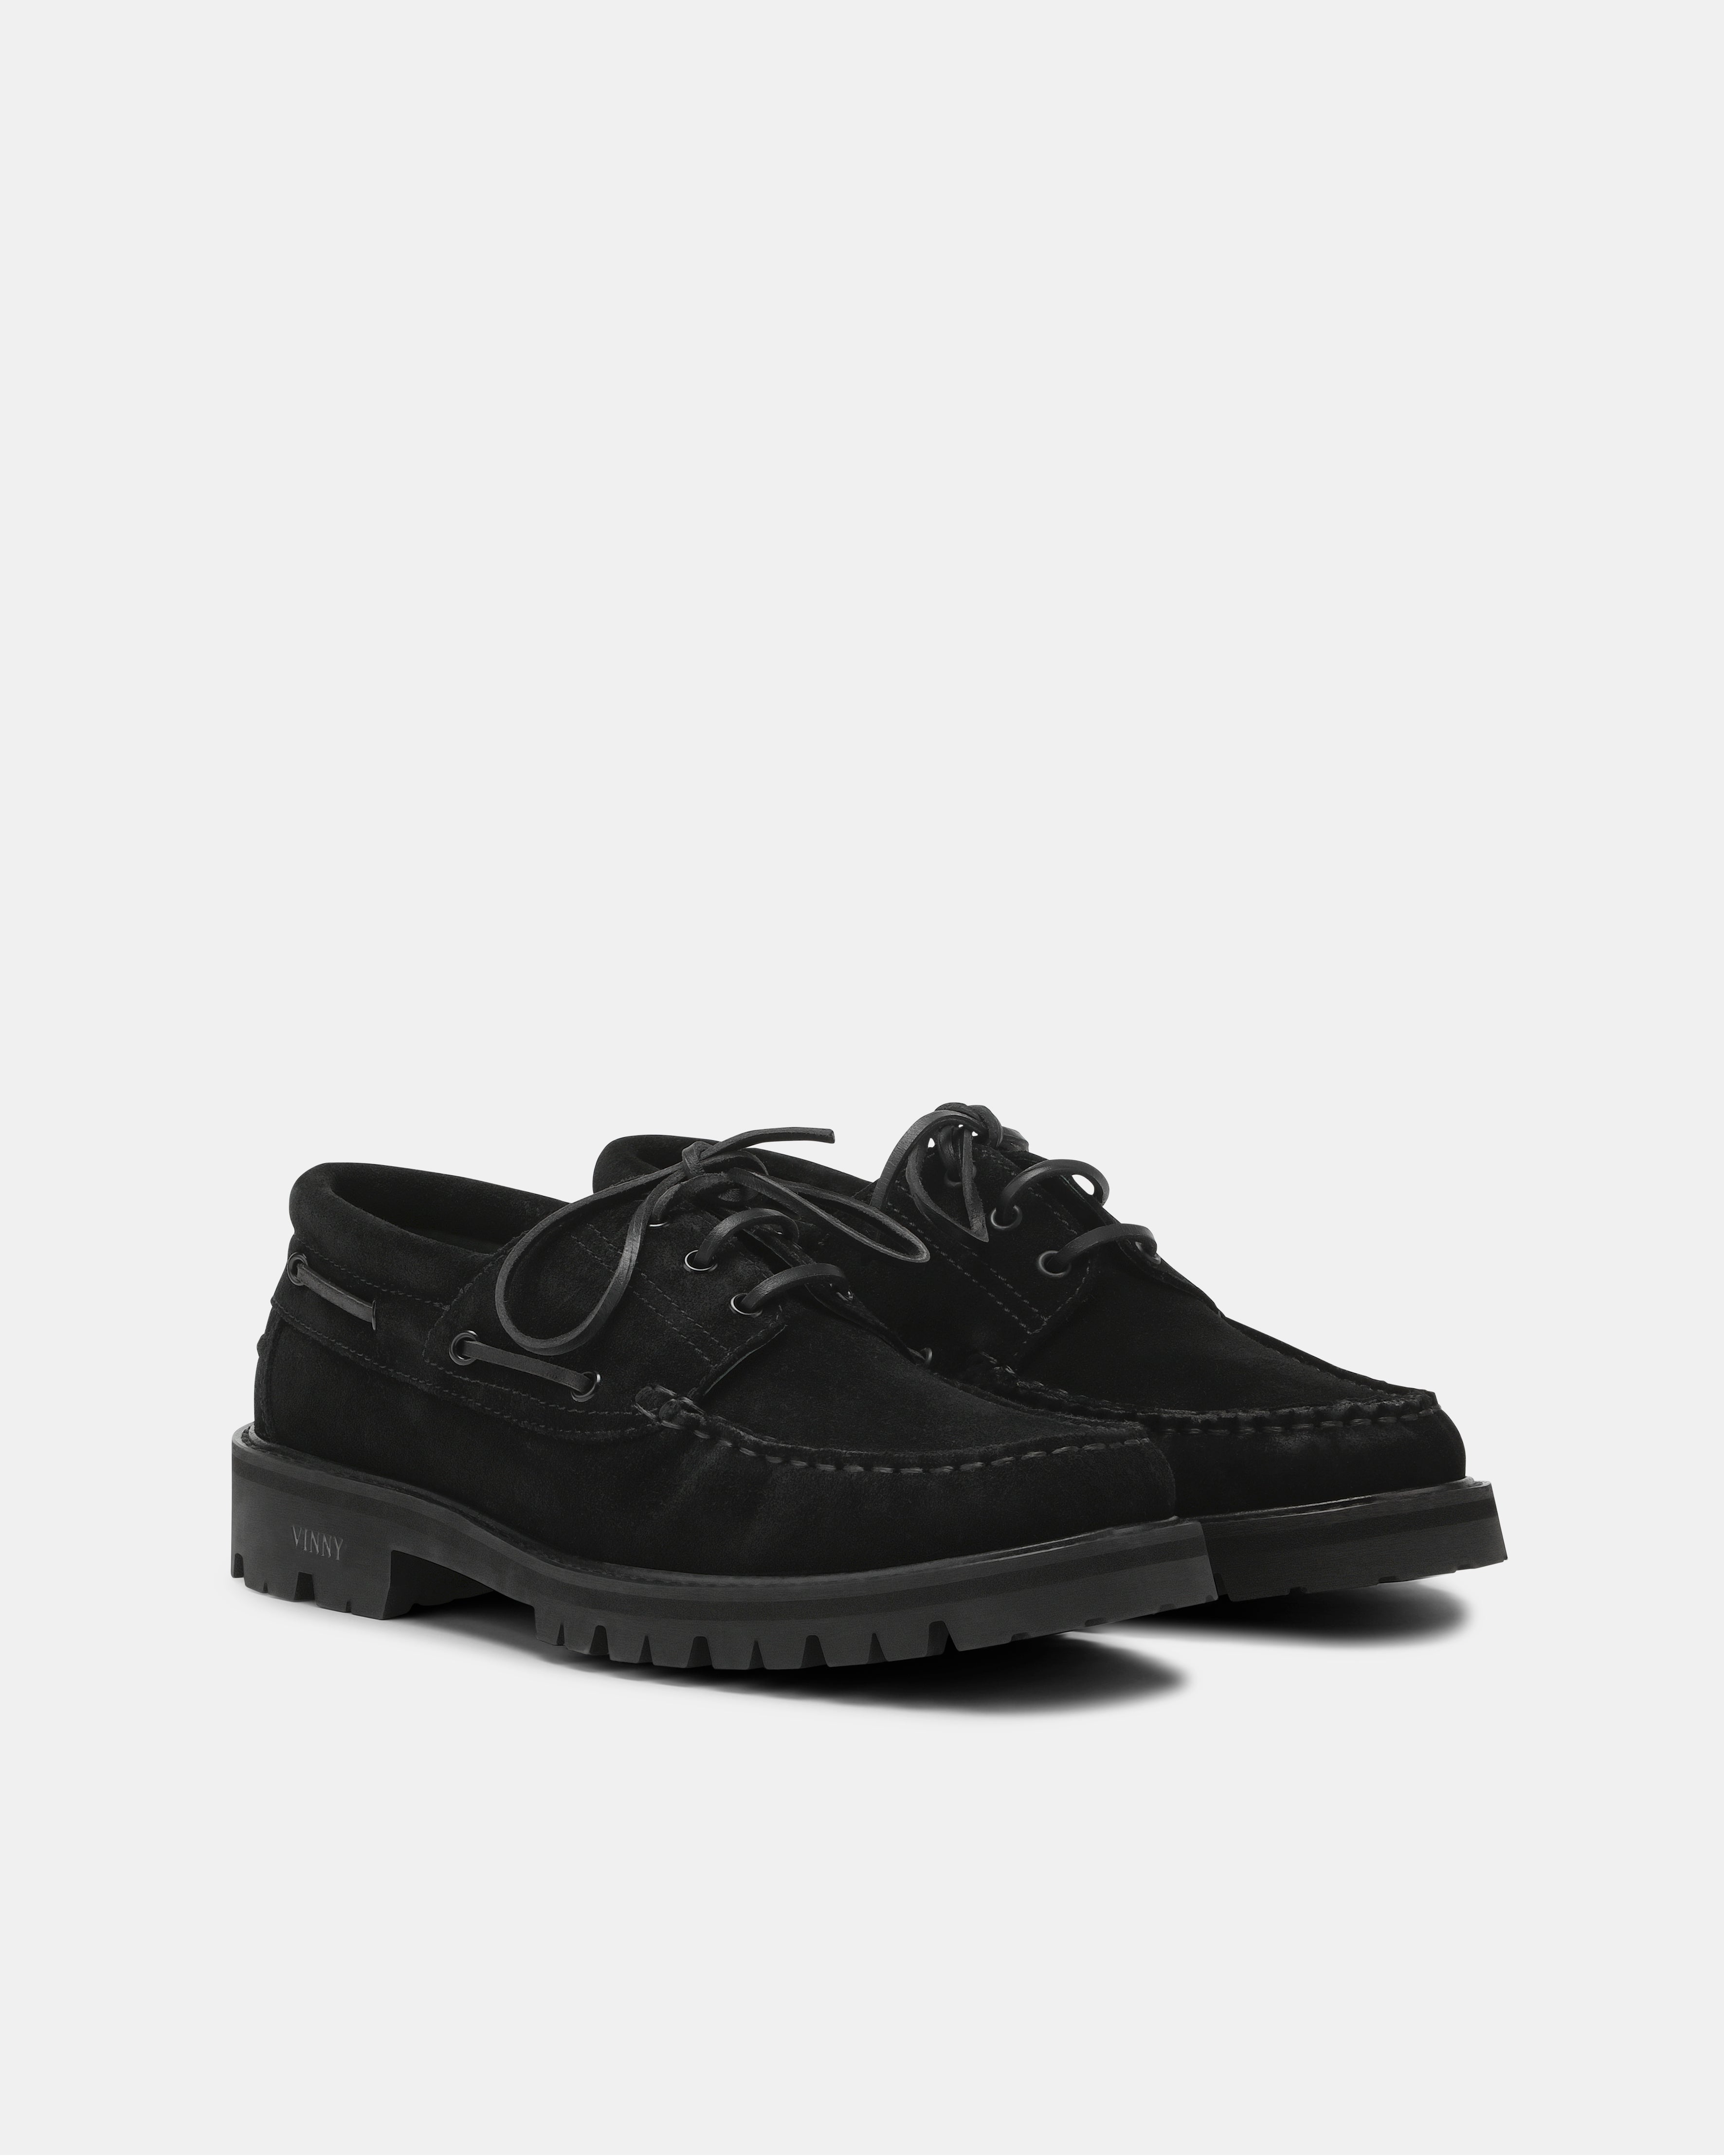 men's aztec boat shoe in black